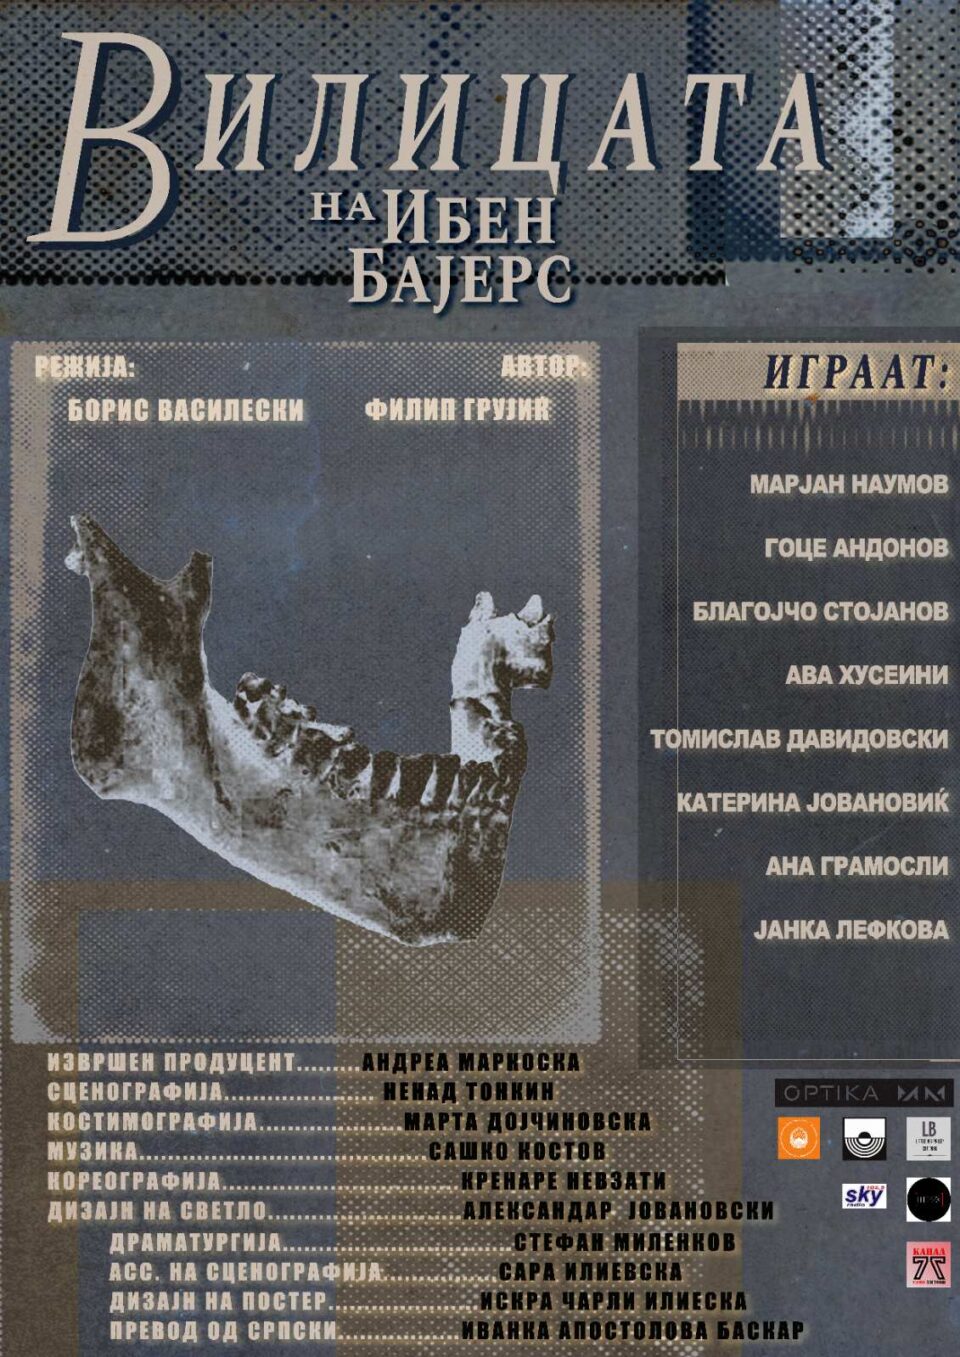 Дипломската претстава на Борис Василевски „Вилицата на Ибен Бајерс“ вечерва на Скопско лето